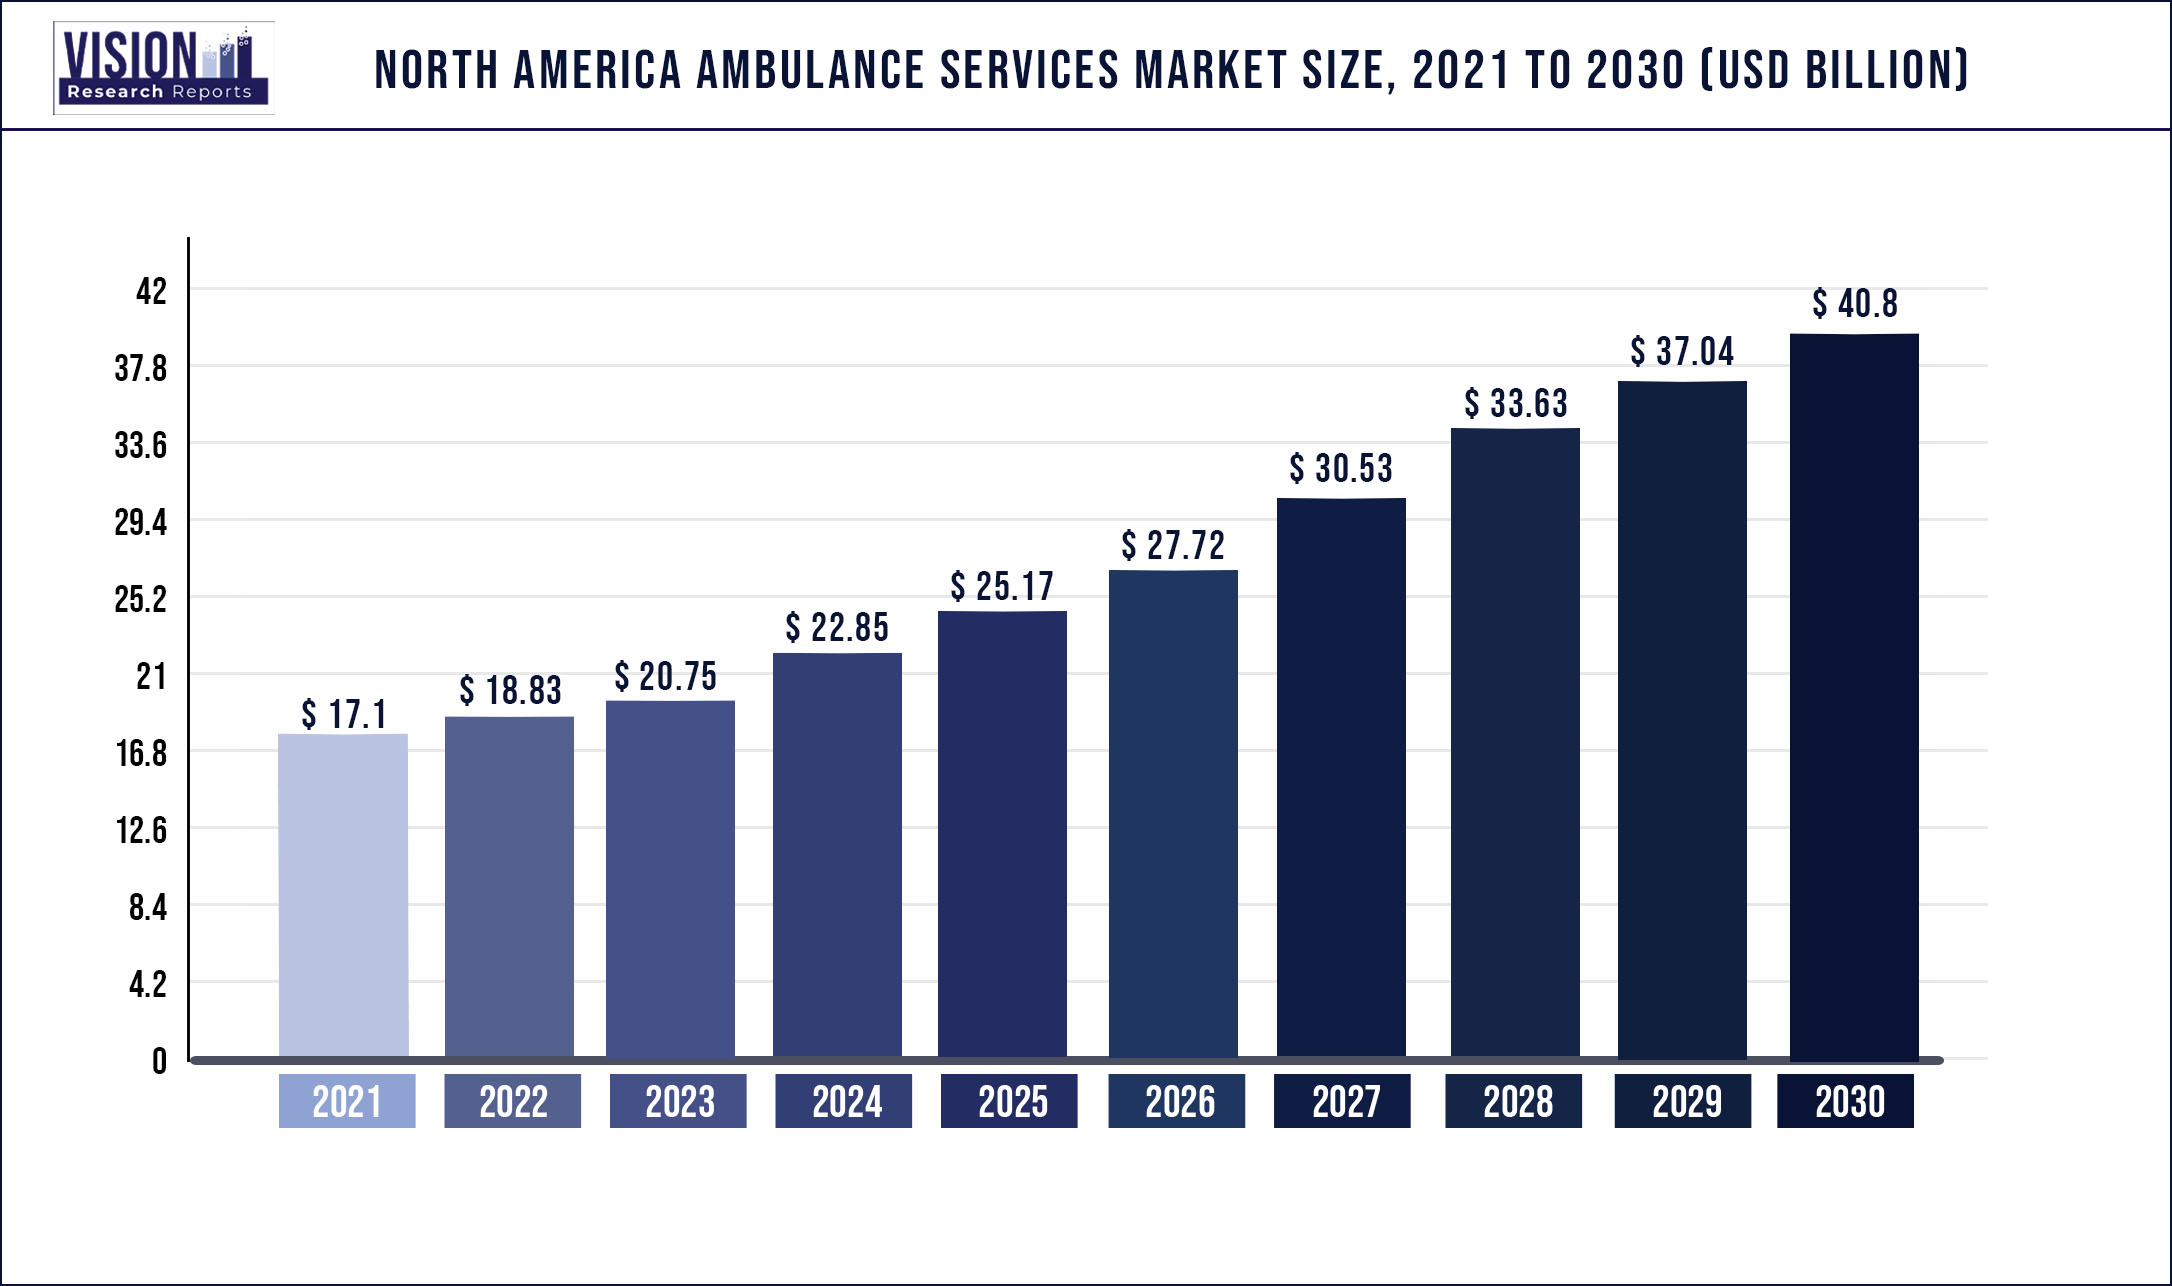 North America Ambulance Services Market Size 2021 to 2030